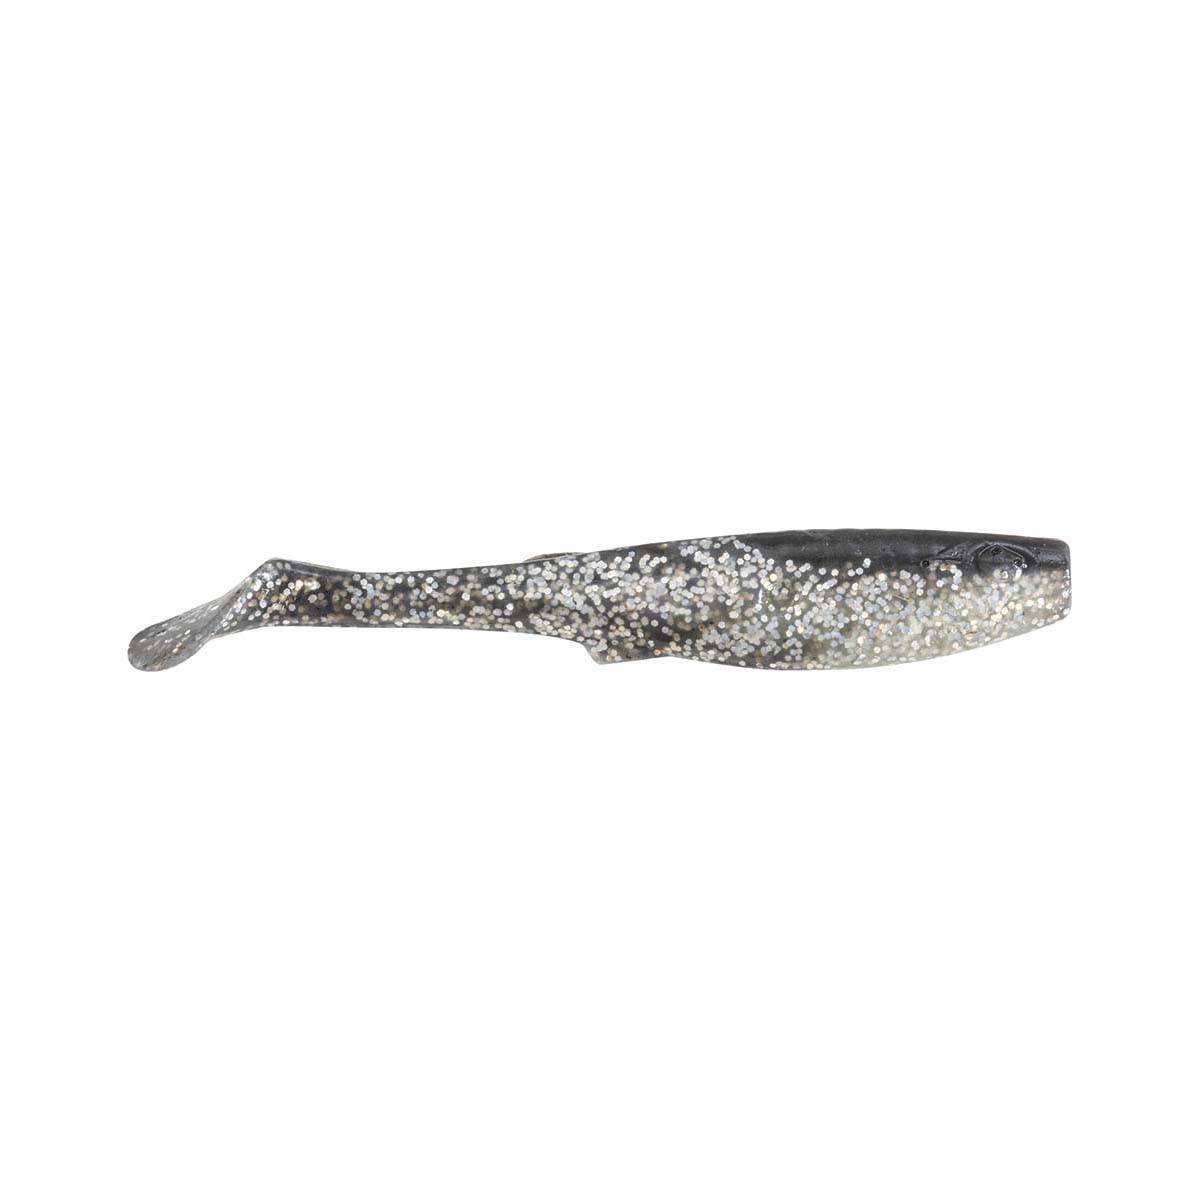 Berkley Gulp! Paddletail Shad Soft Plastic Lure 5in Black / Silver